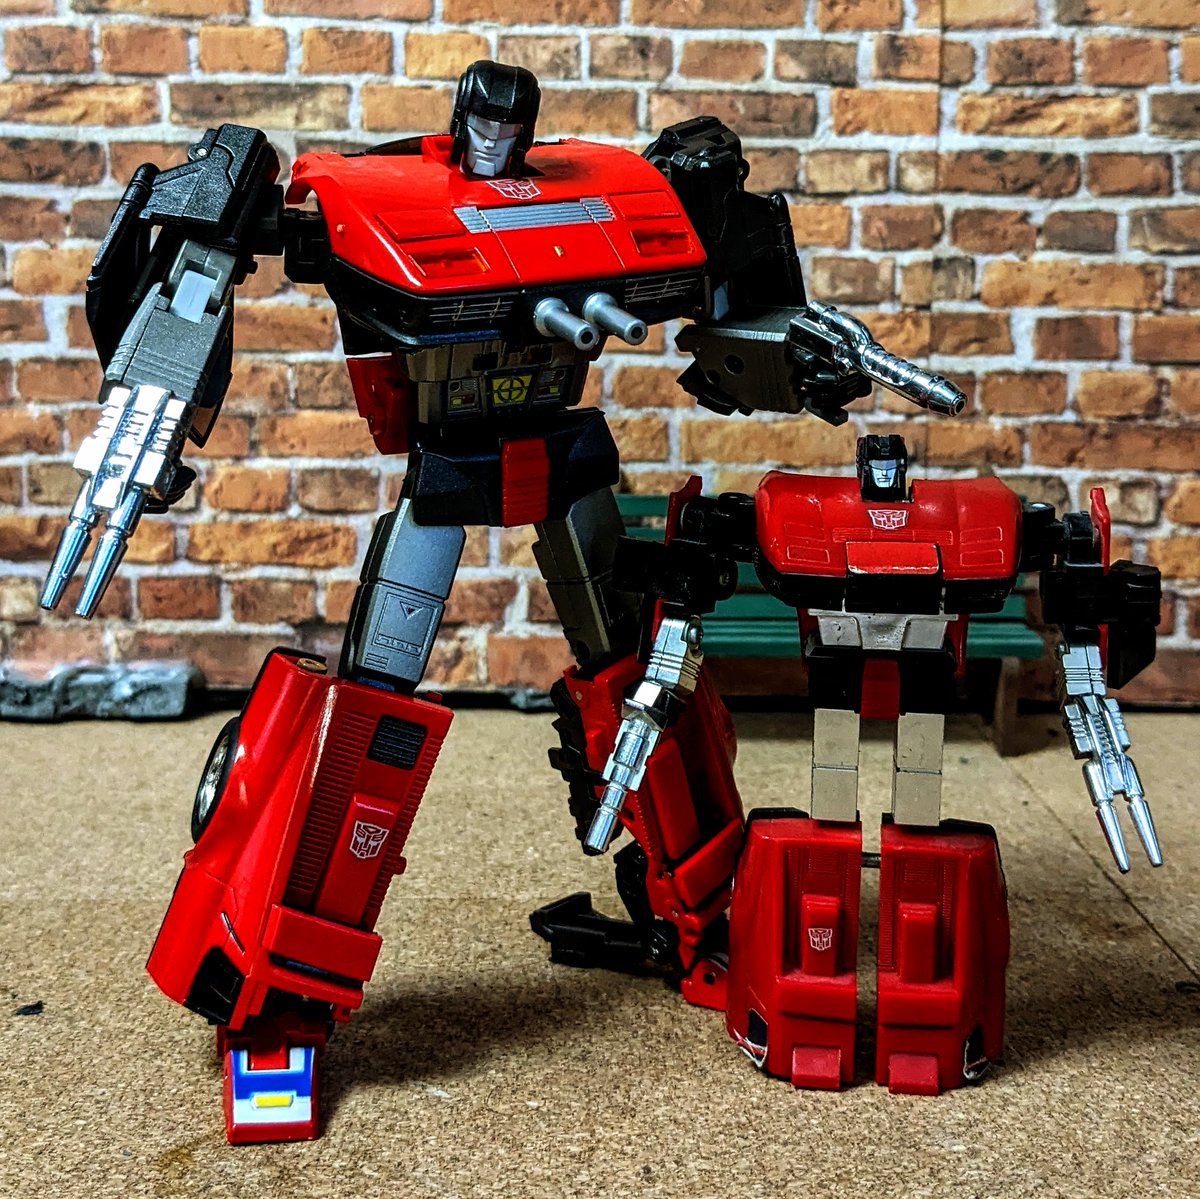 Transformers X-transbots Fioravanti aka Omnibot Overdrive.

#transformers #xtransbots #fioravanti
#omnibots #Overdrive